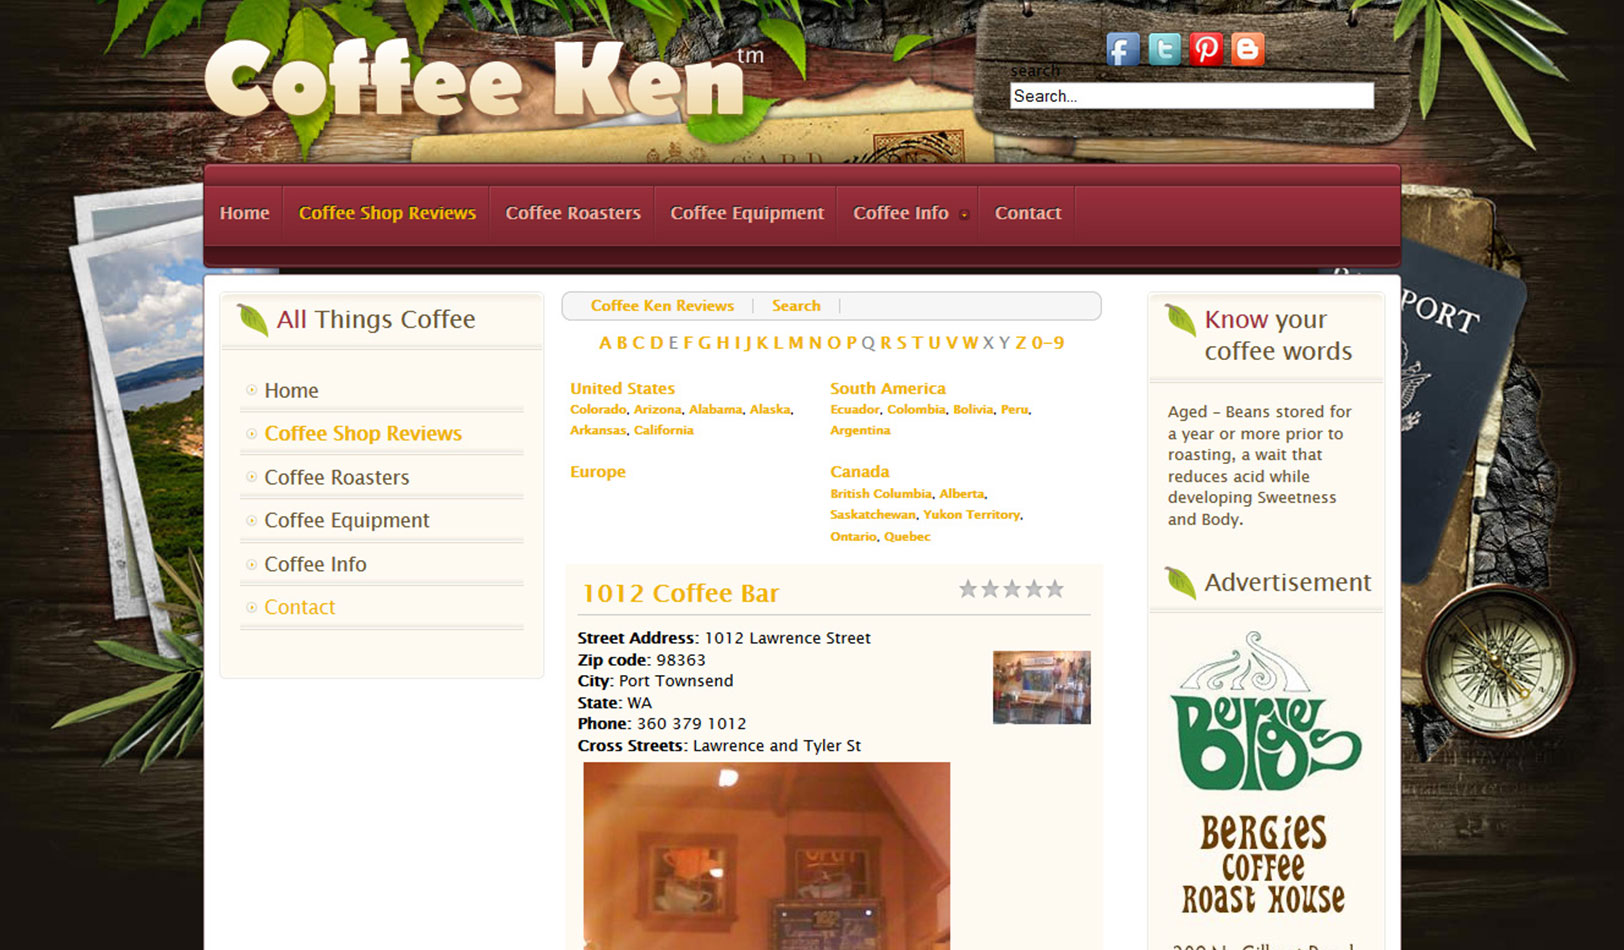 images/Portfolio-images/Coffee-Ken.jpg#joomlaImage://local-images/Portfolio-images/Coffee-Ken.jpg?width=1624&height=950